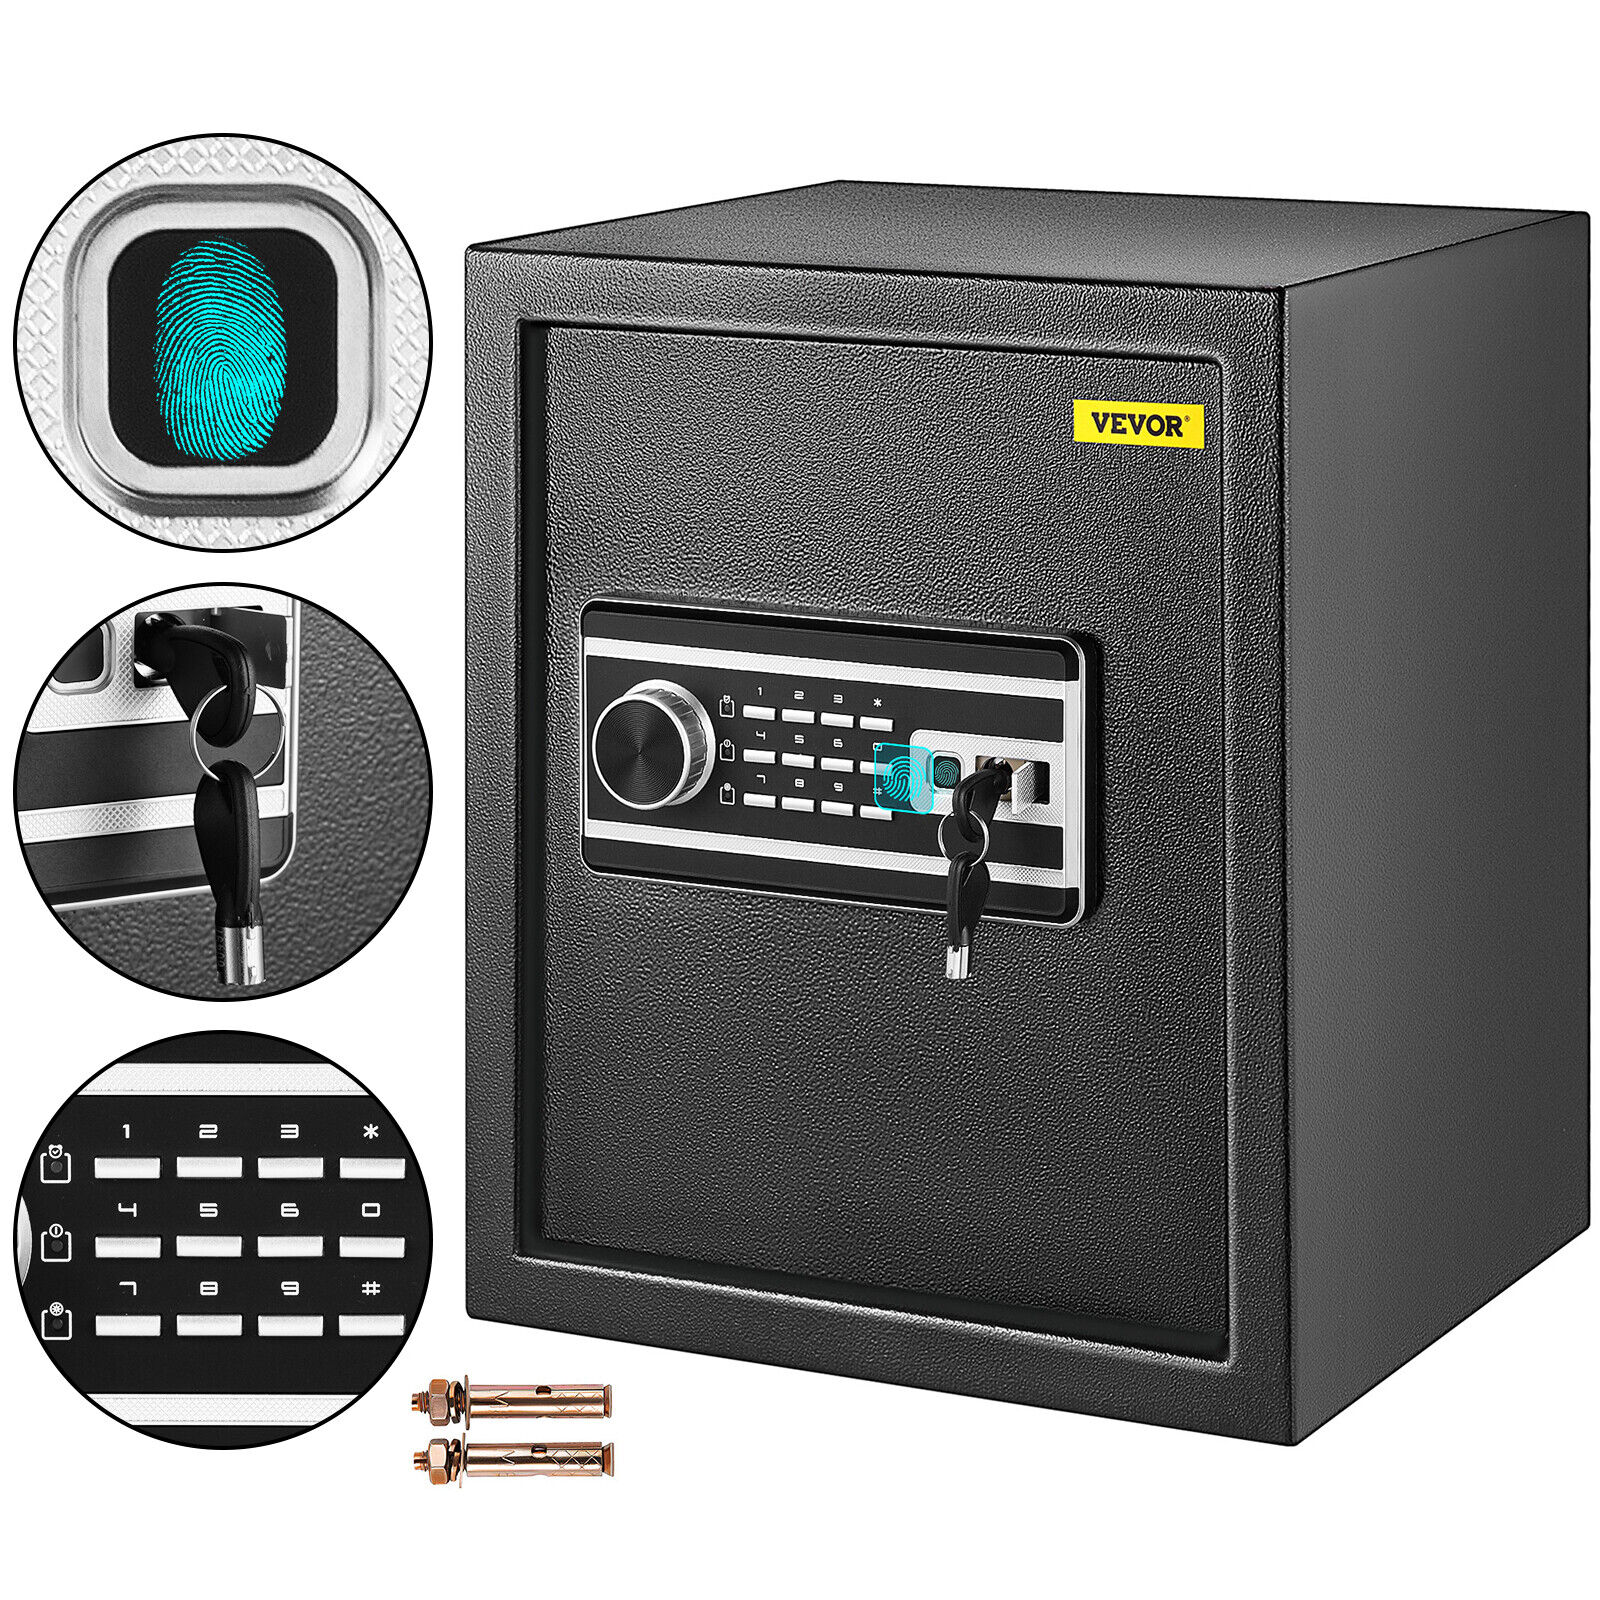 VEVOR Biometric Safe Box Fingerprint 1.7 Cu Feet Security Home Office Hotel Gun